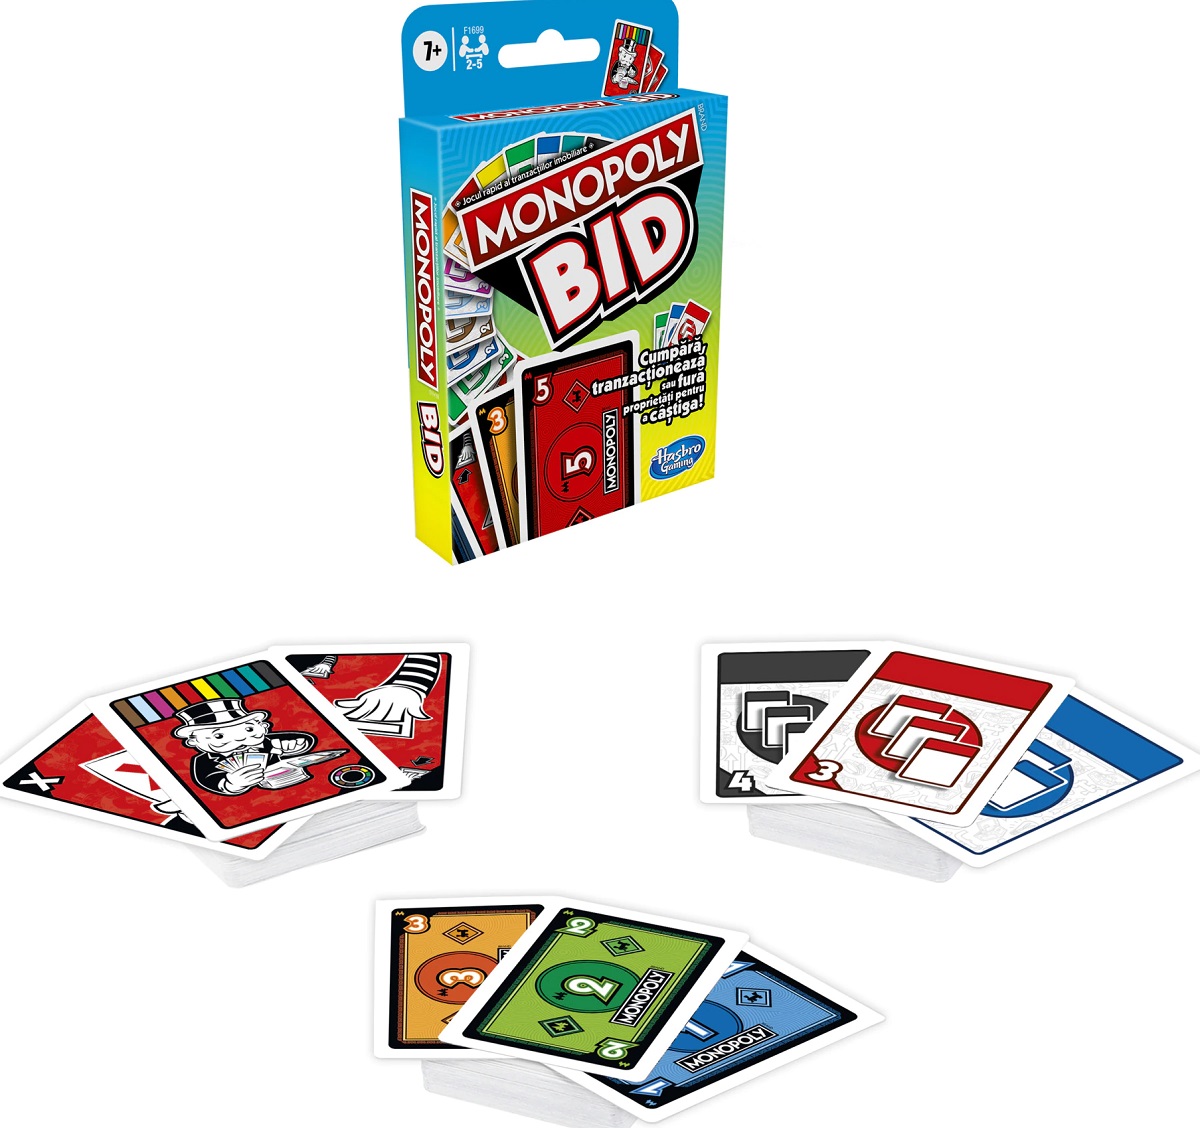 Monopoly Bid, joc de carti